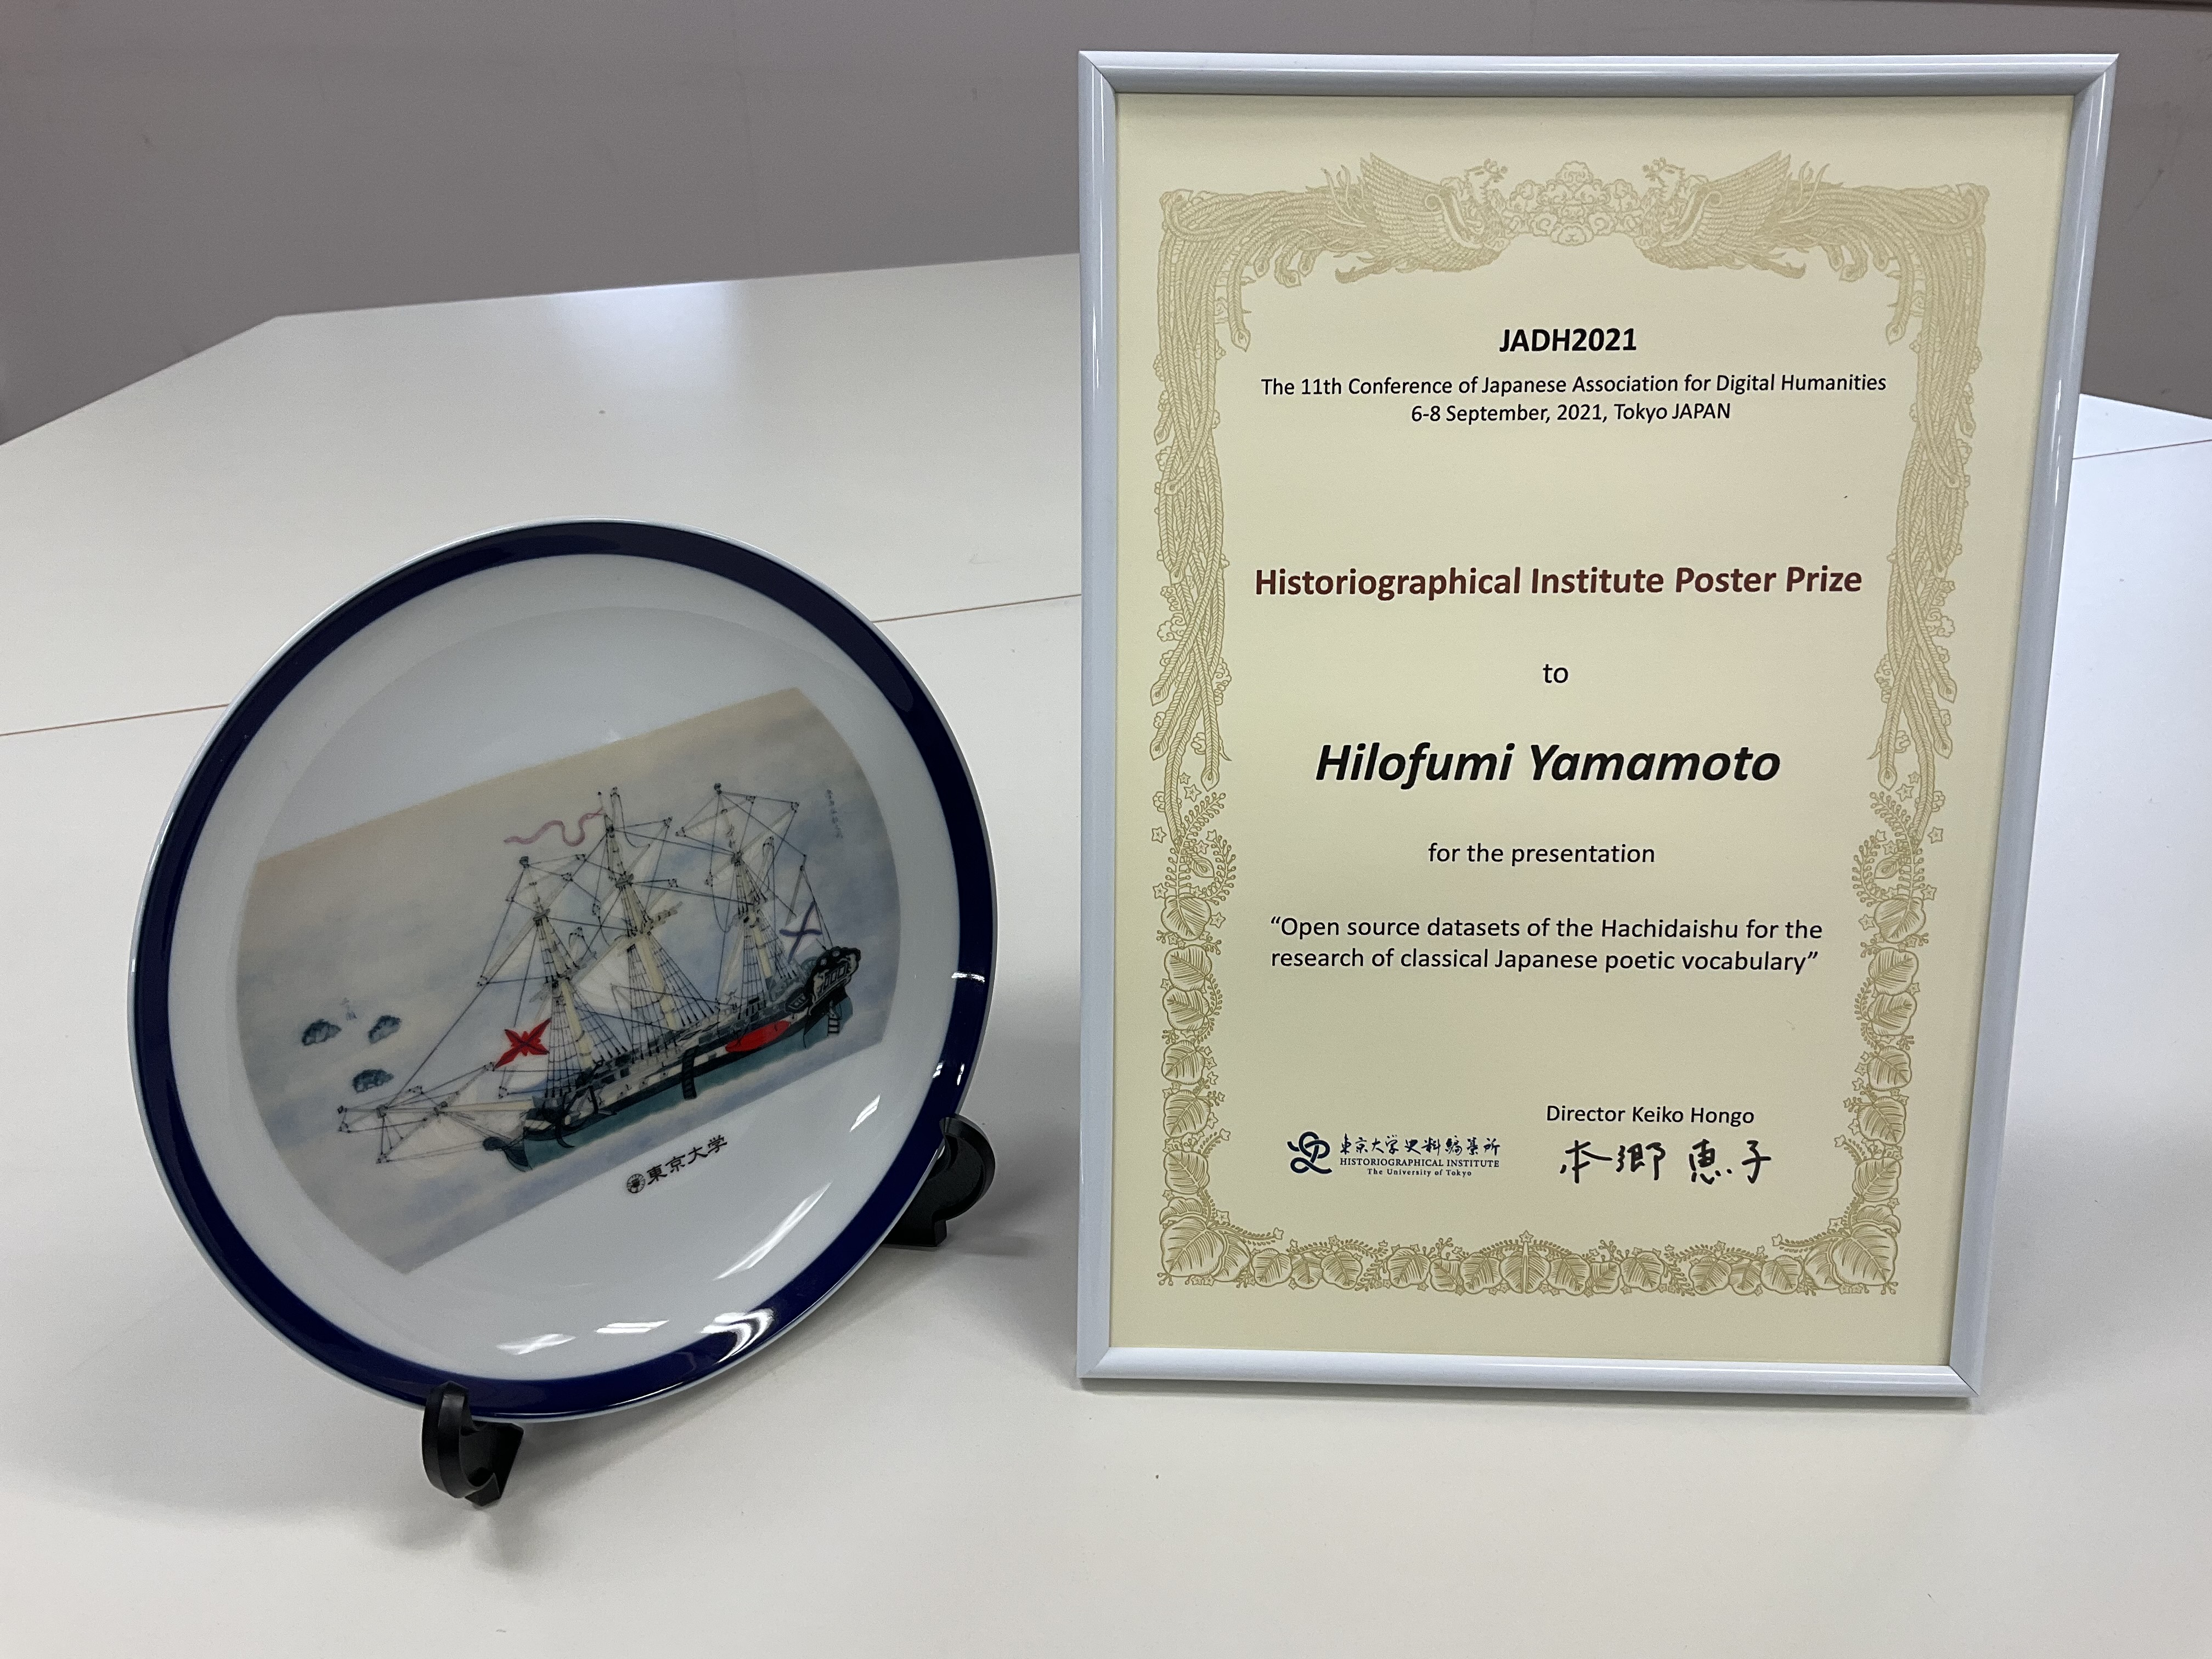 Digital Humanities Poster Award Certificate and Commemorative Plate 